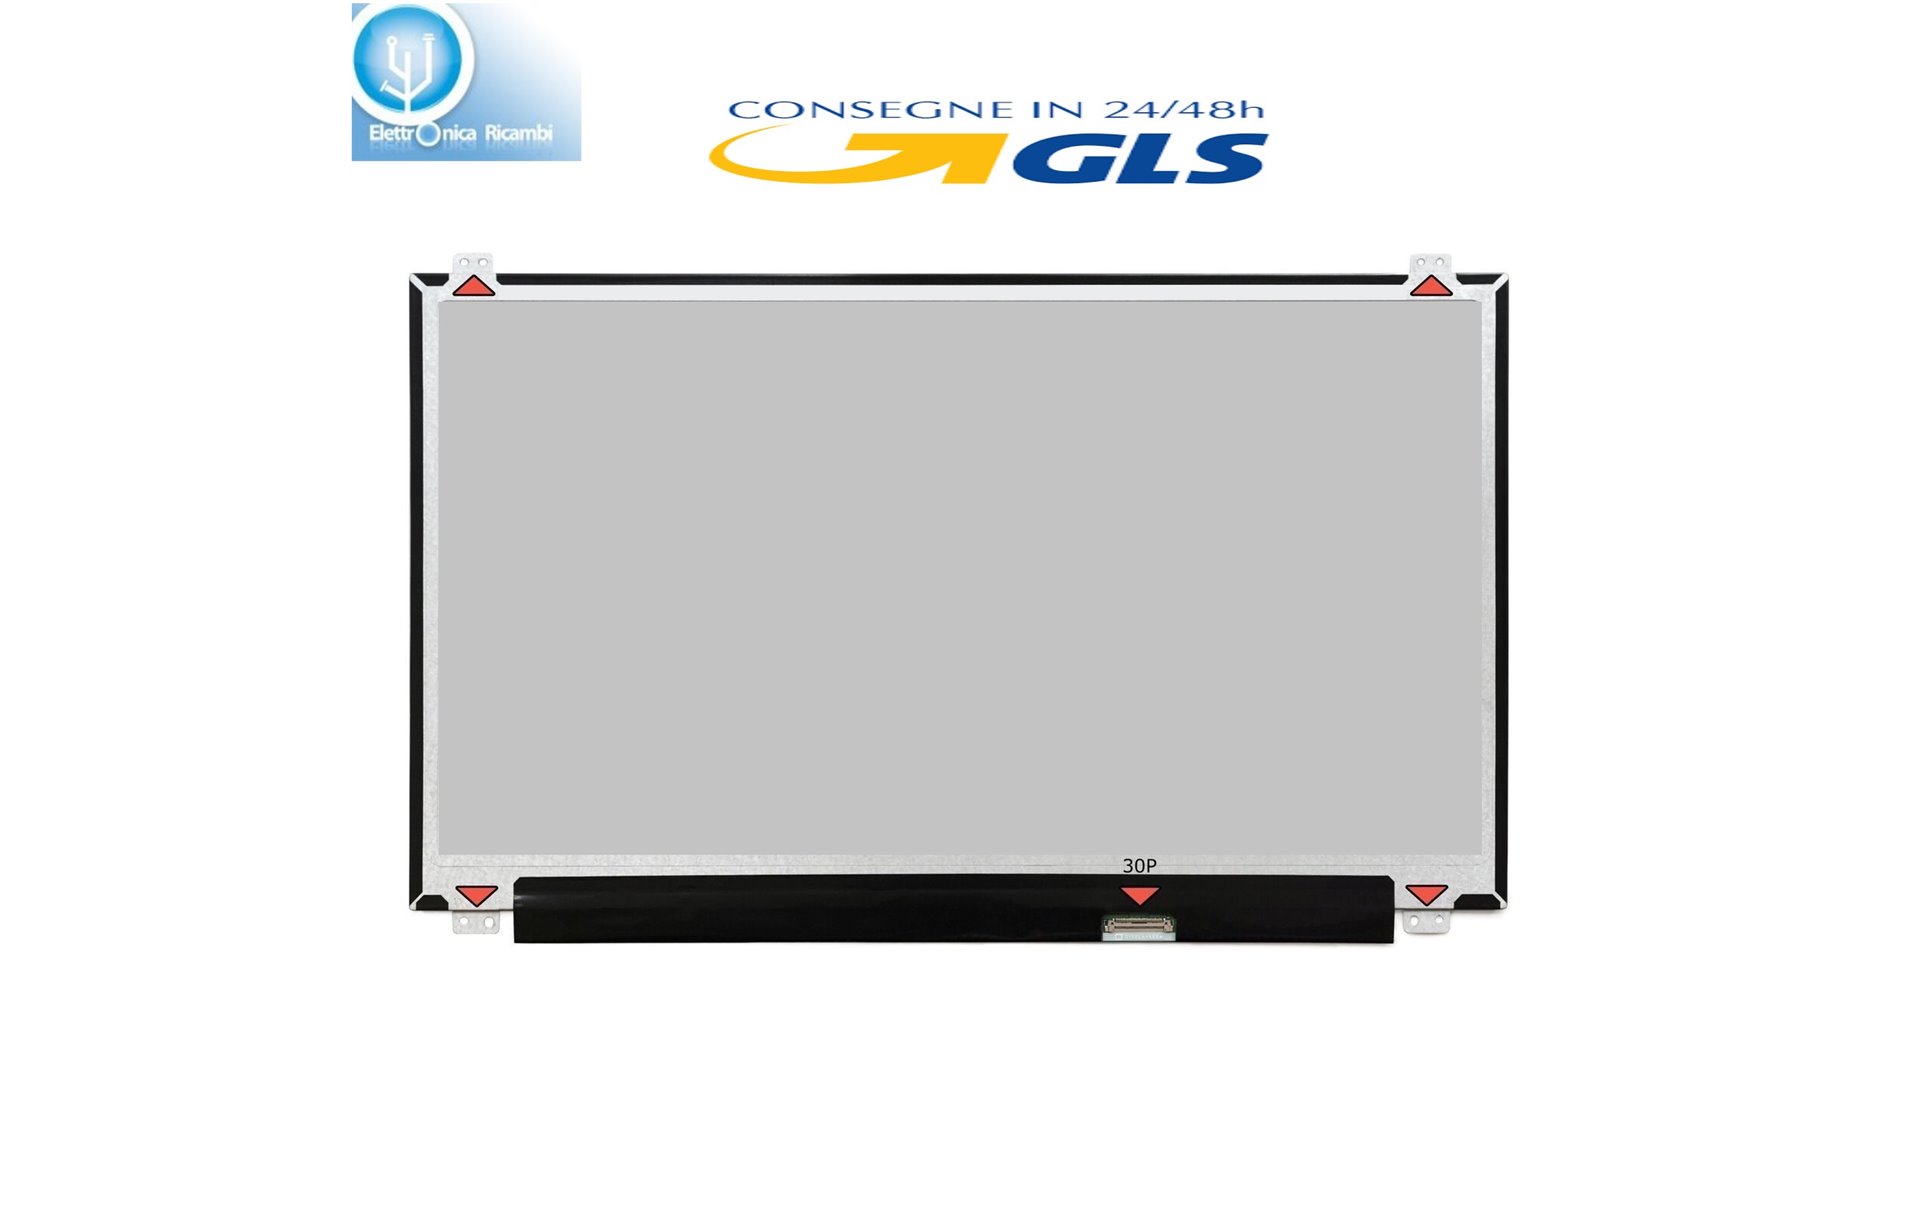 DISPLAY LCD Lenovo IDEAPAD 305 (15 INCH) SERIES  15.6 WideScreen (13.6"x7.6") LED"